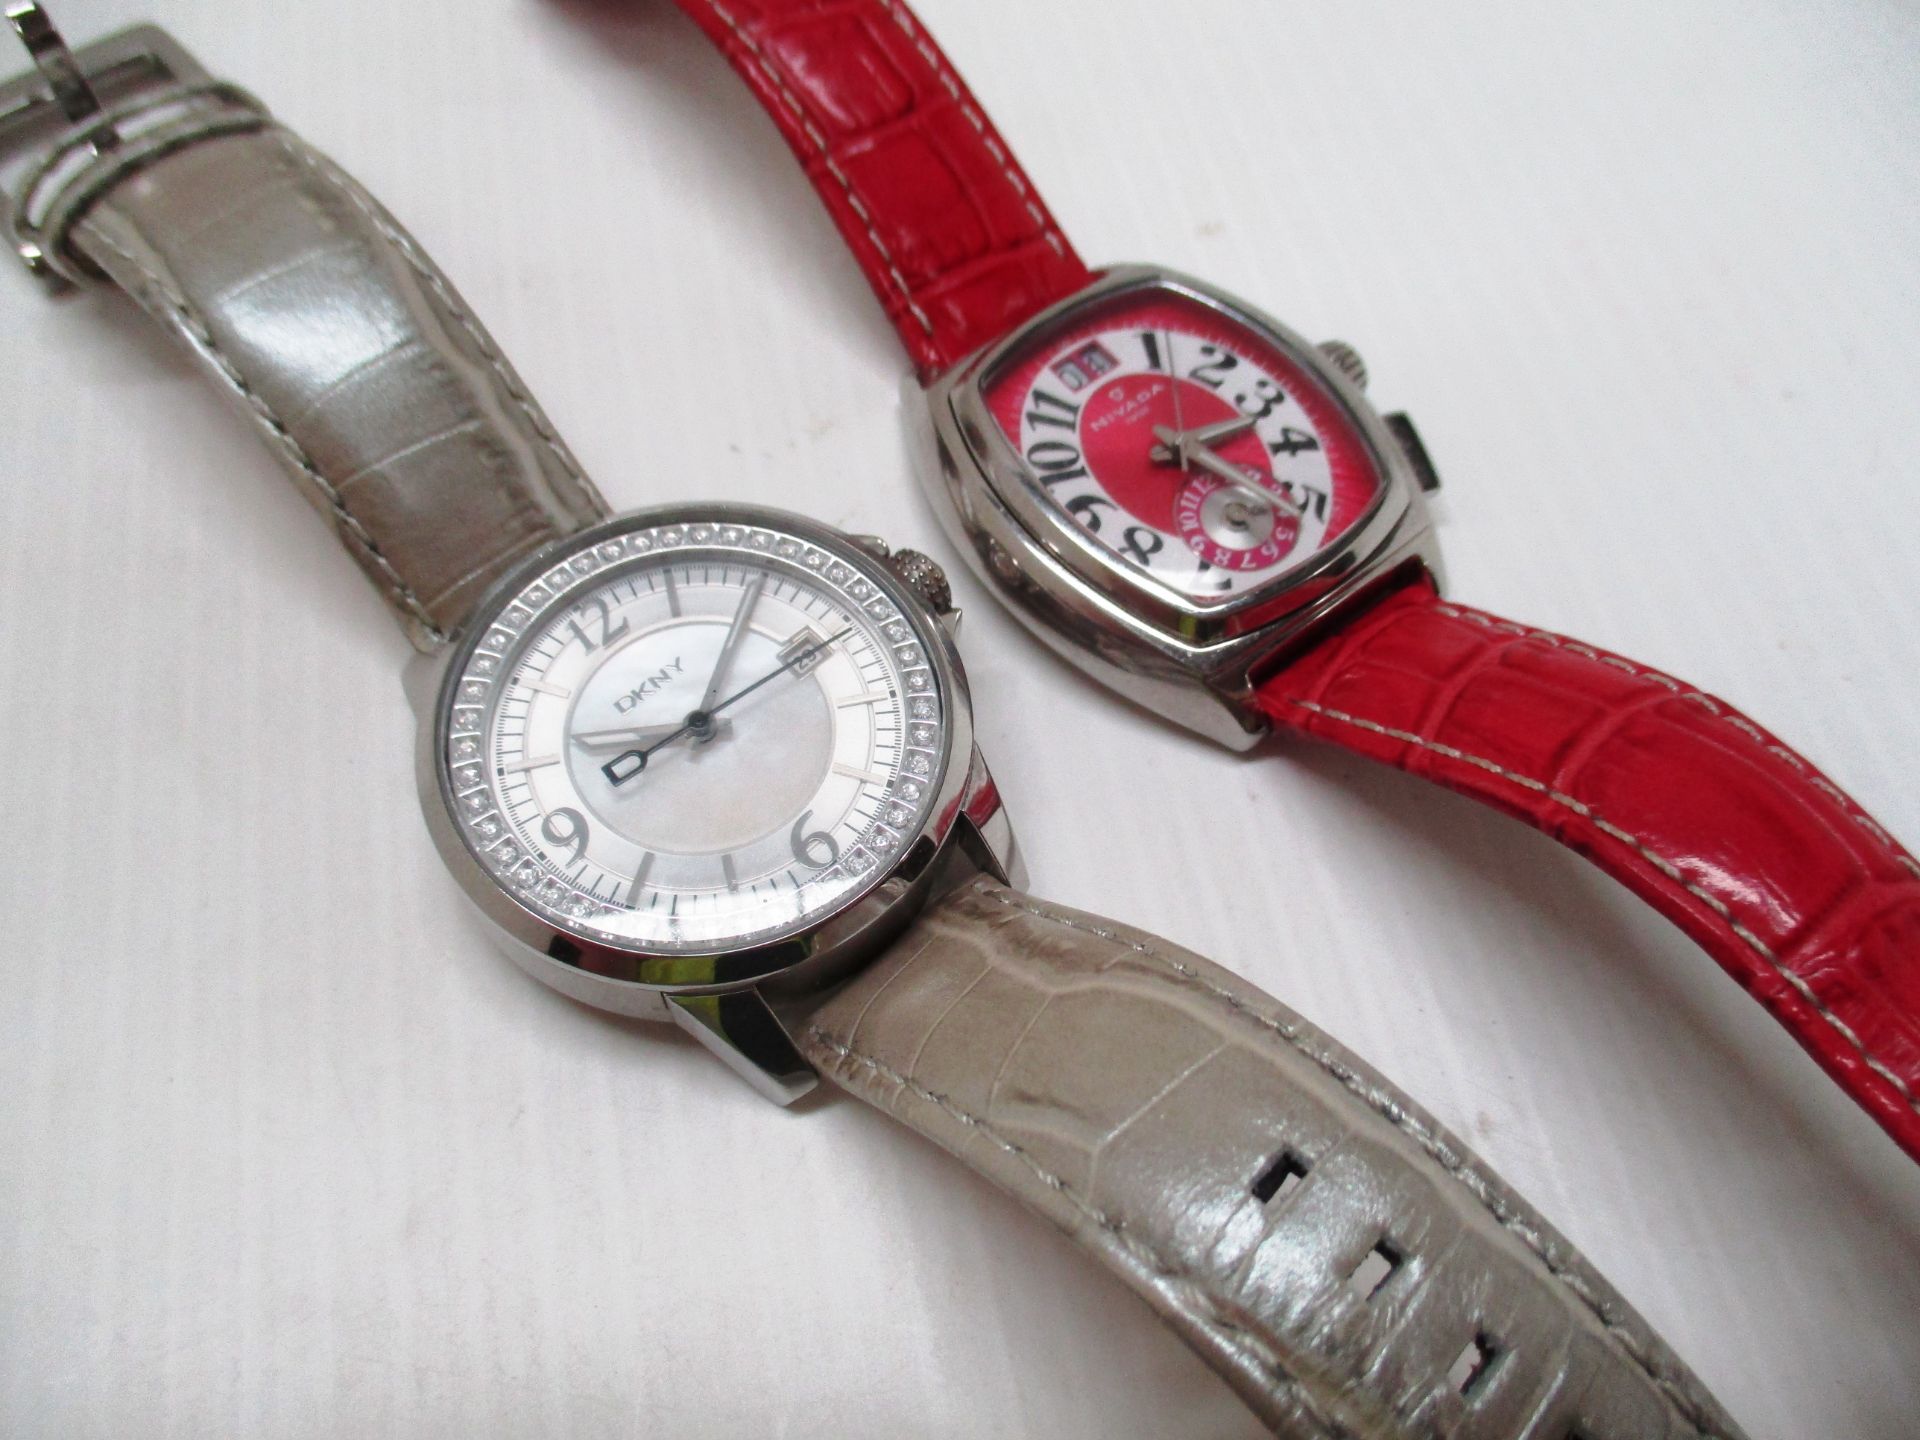 A ladies DKNY wristwatch with crocodile skin effect leather strap and a ladies Nivada wristwatch